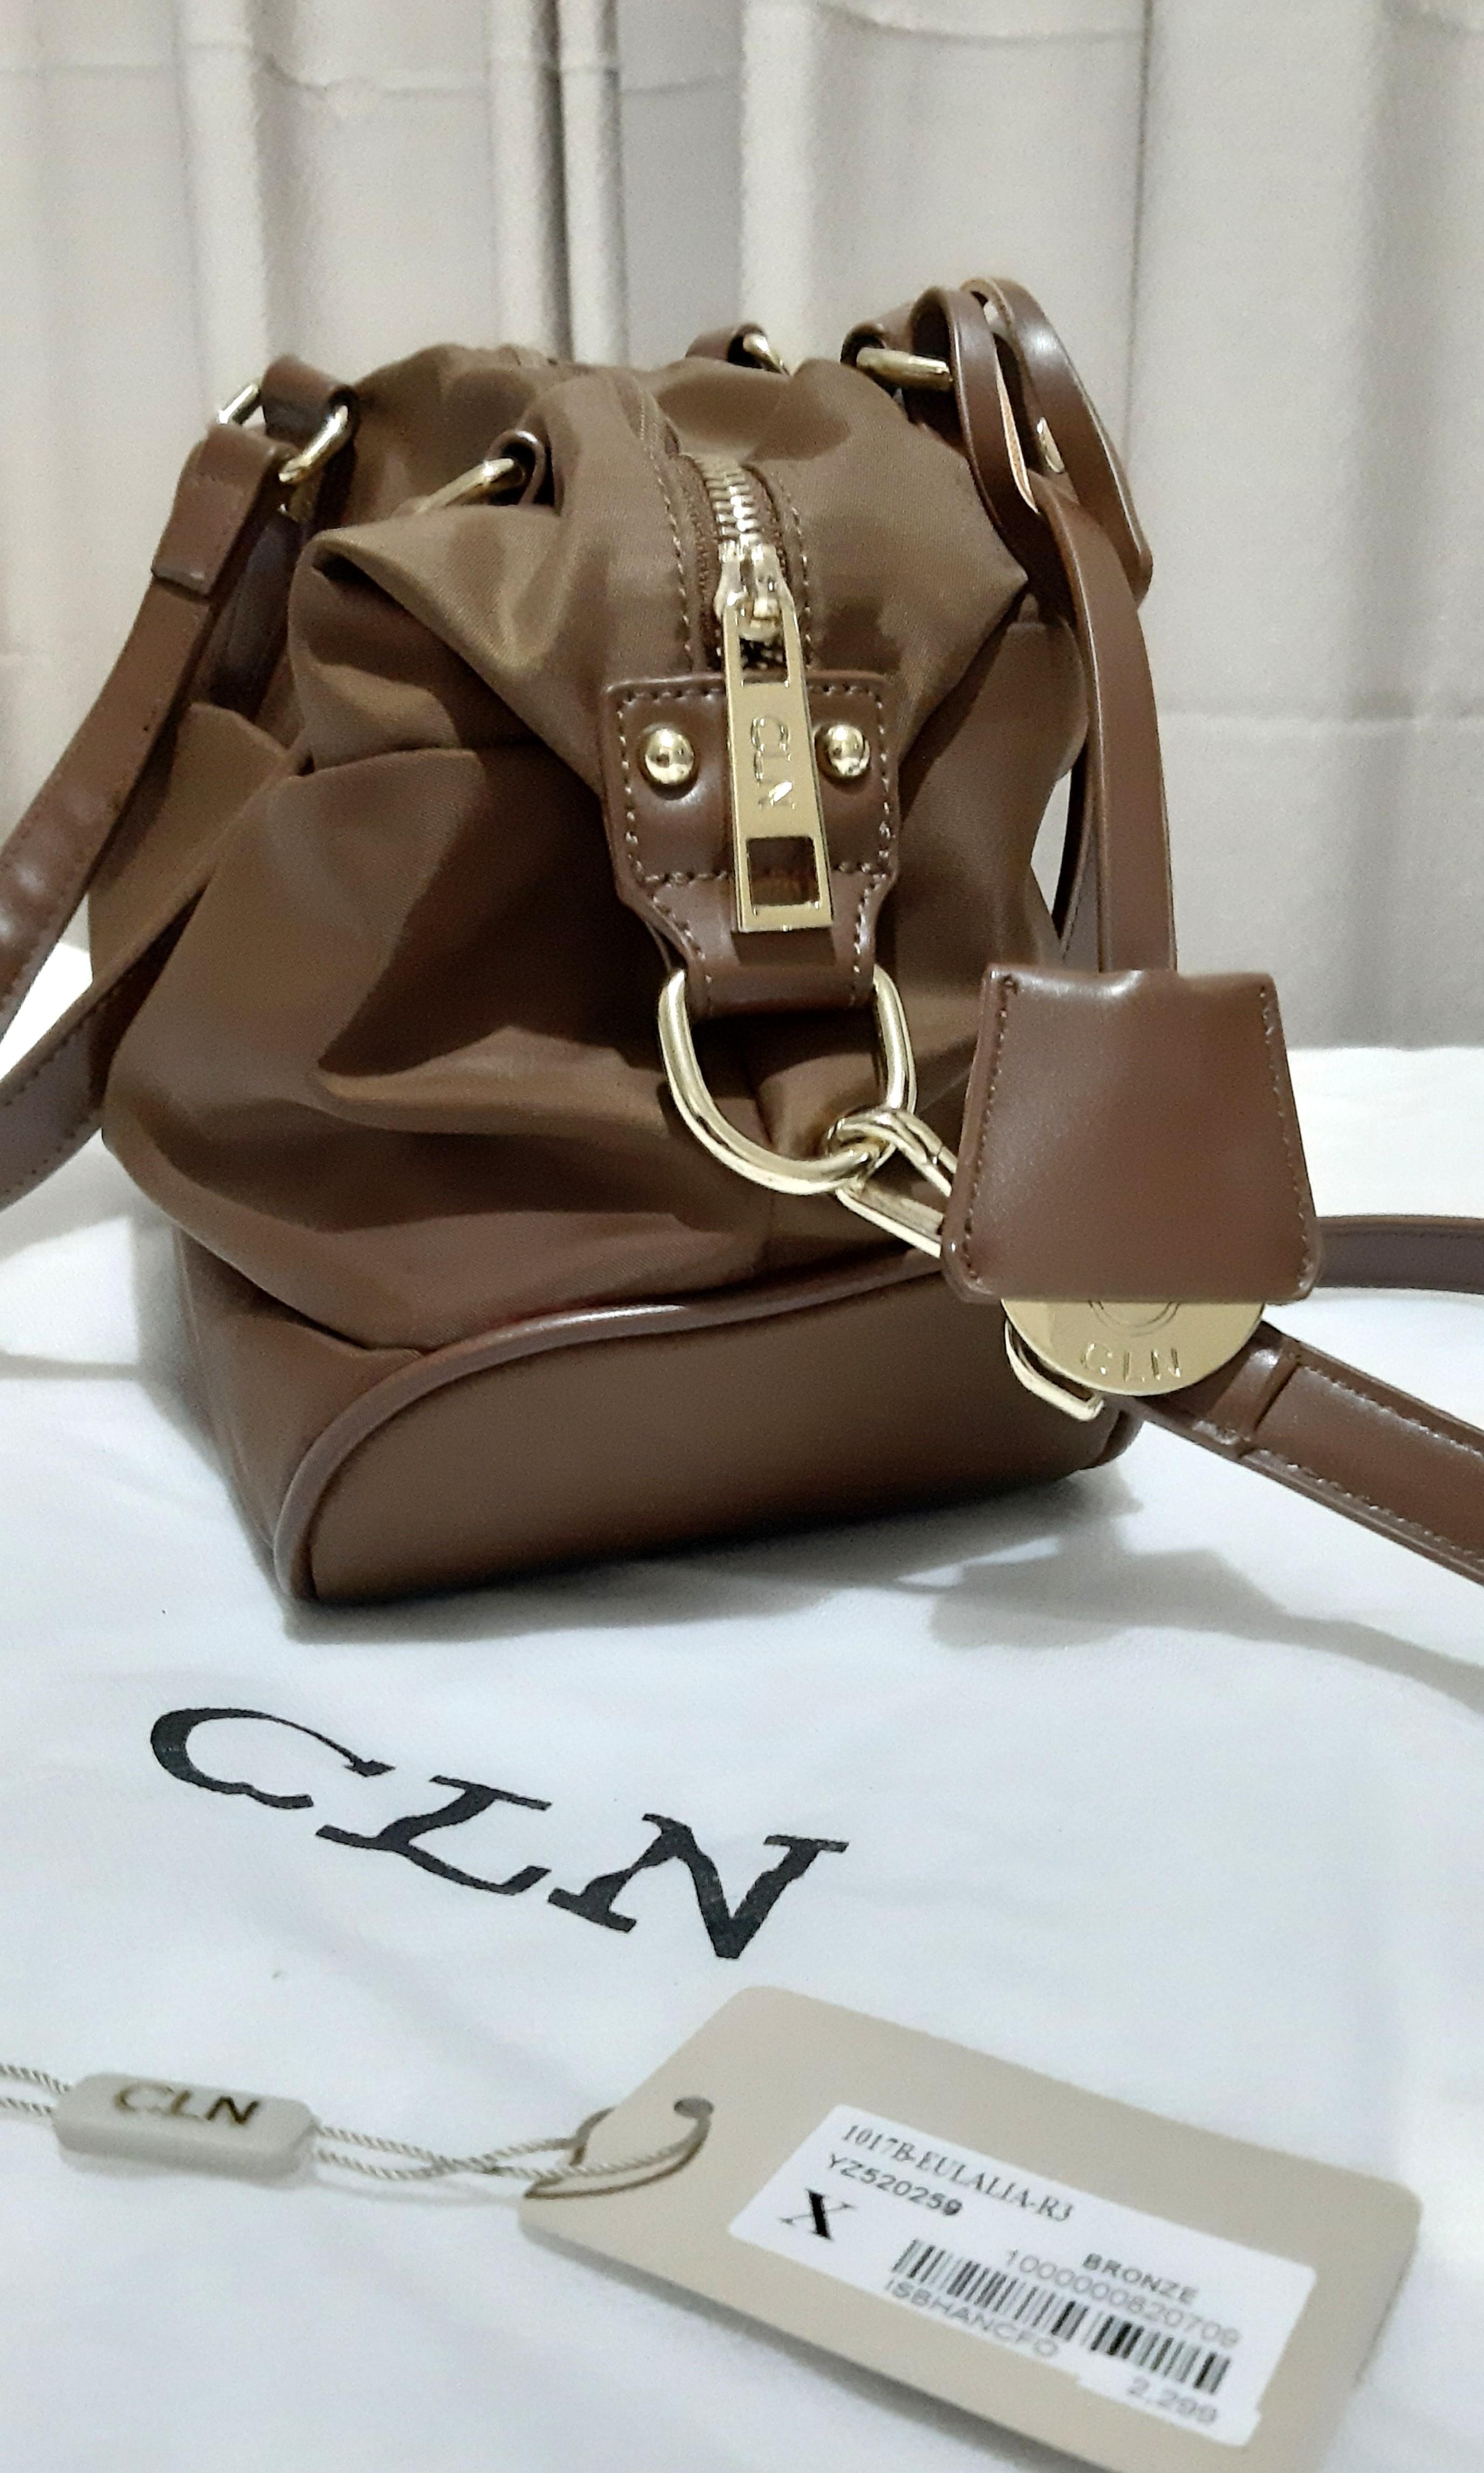 CLN Brainy Convertible Bag Le Boy Style, Women's Fashion, Bags